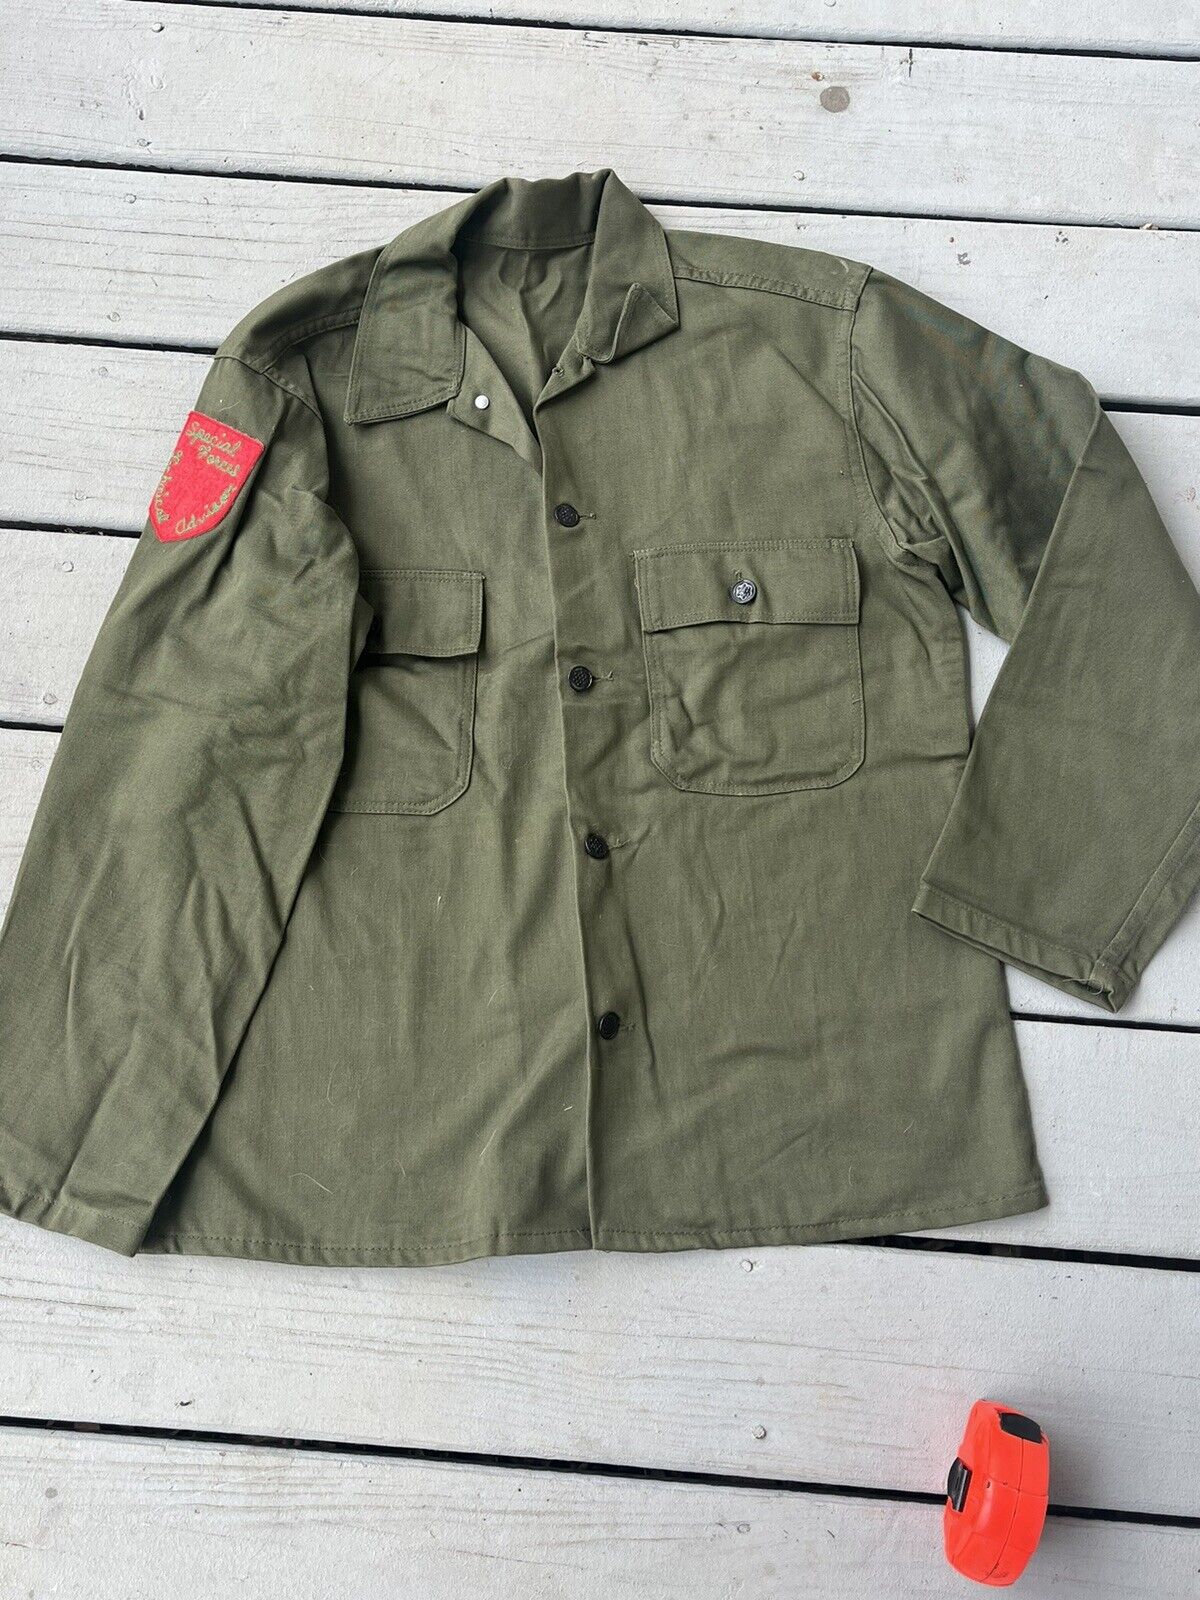 SPECIAL FORCES TECHNICAL ADVISOR WWII Vietnam Uniform Shirt 13 Star Blouse Patch